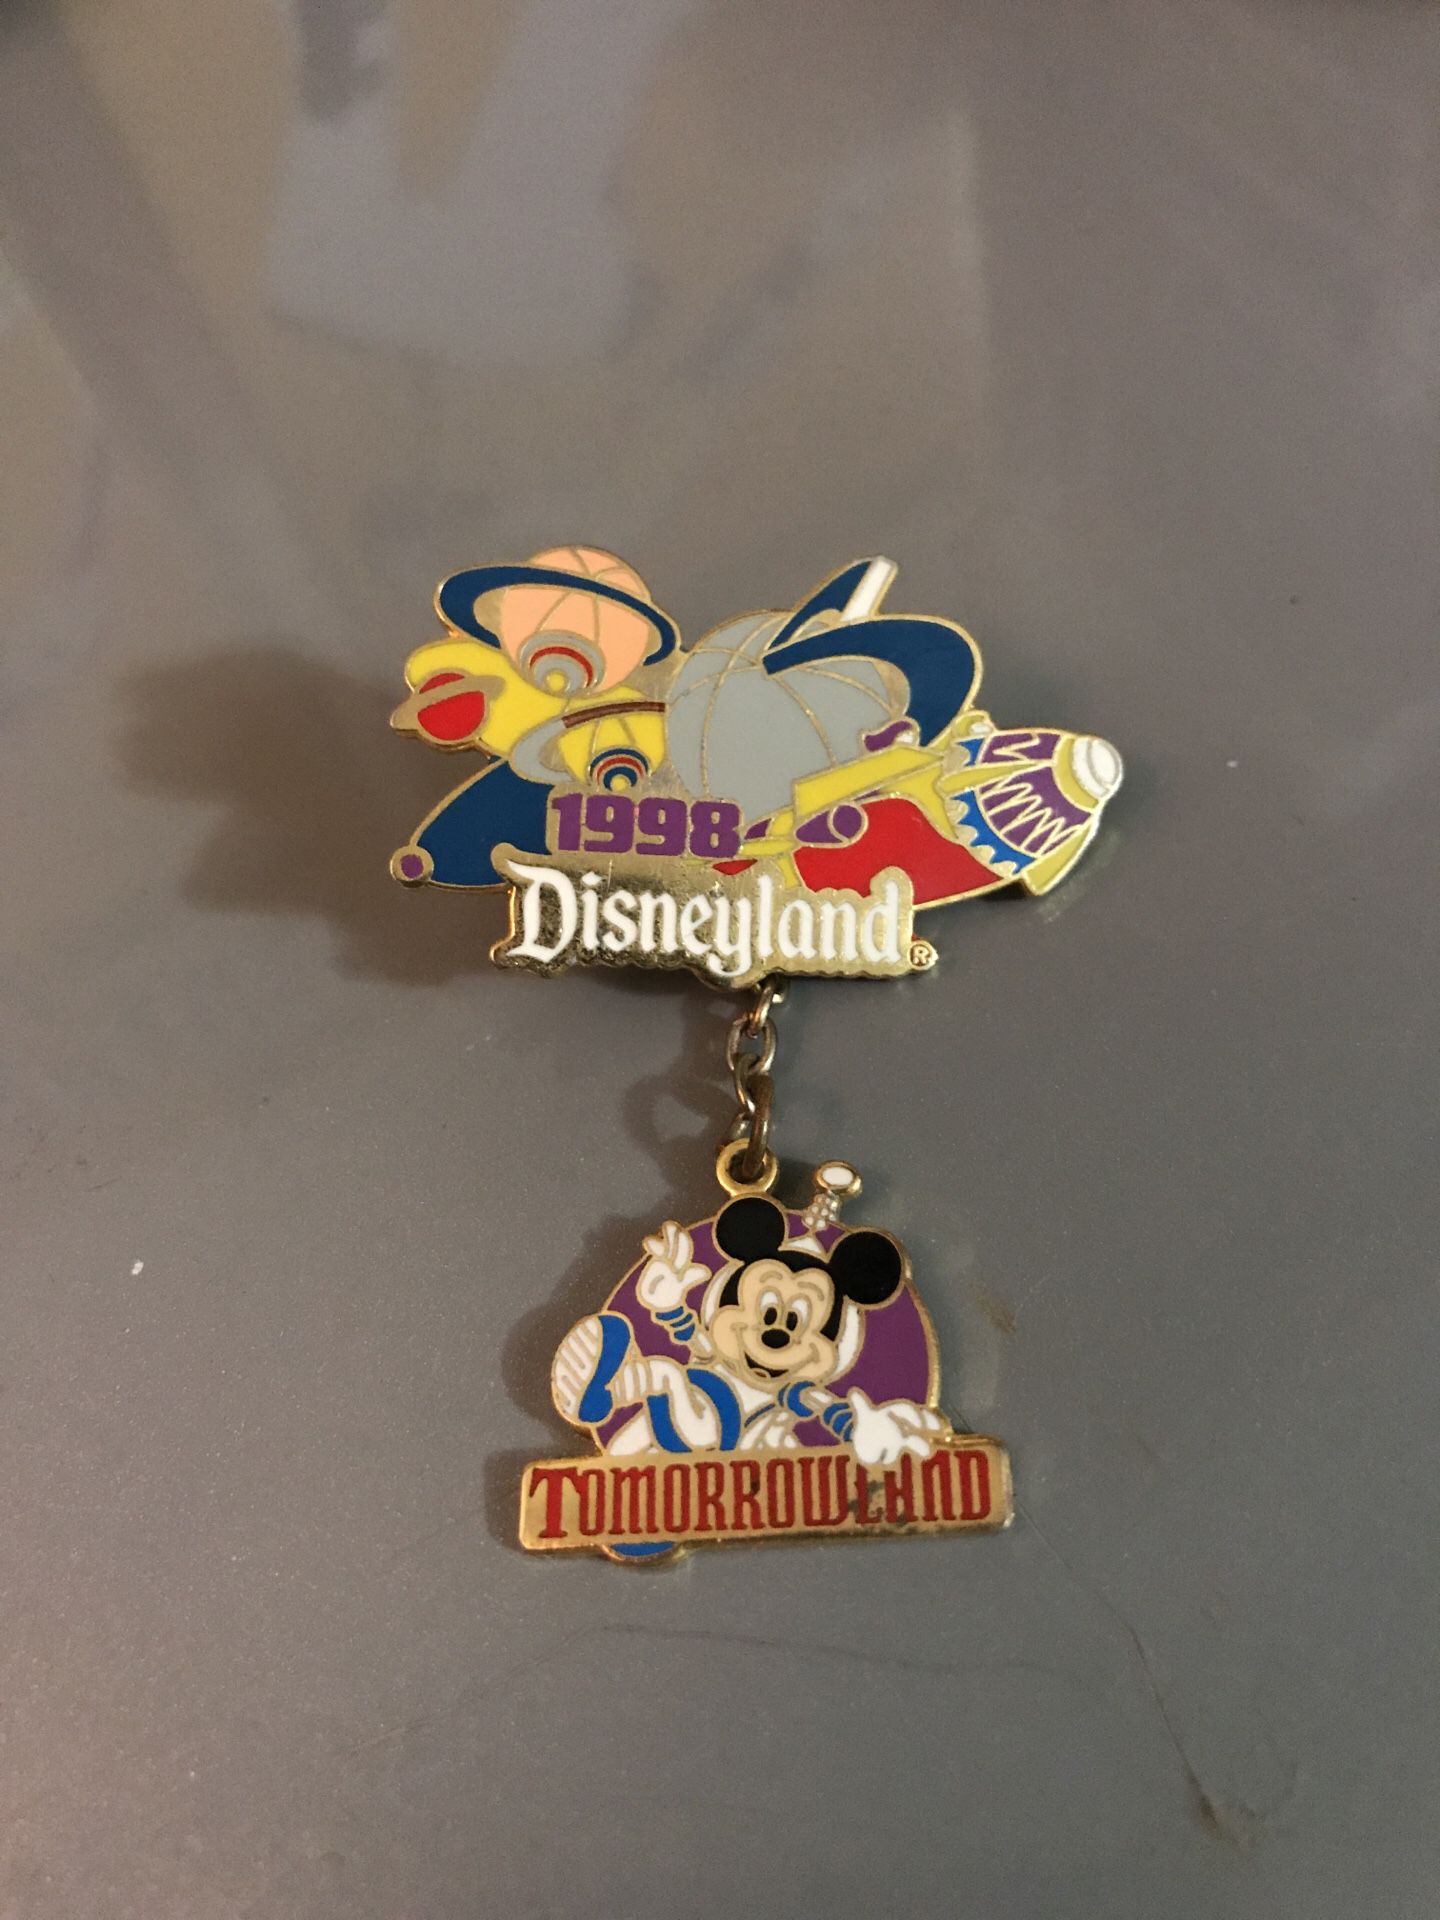 1998 Tomorrow land Disney pin